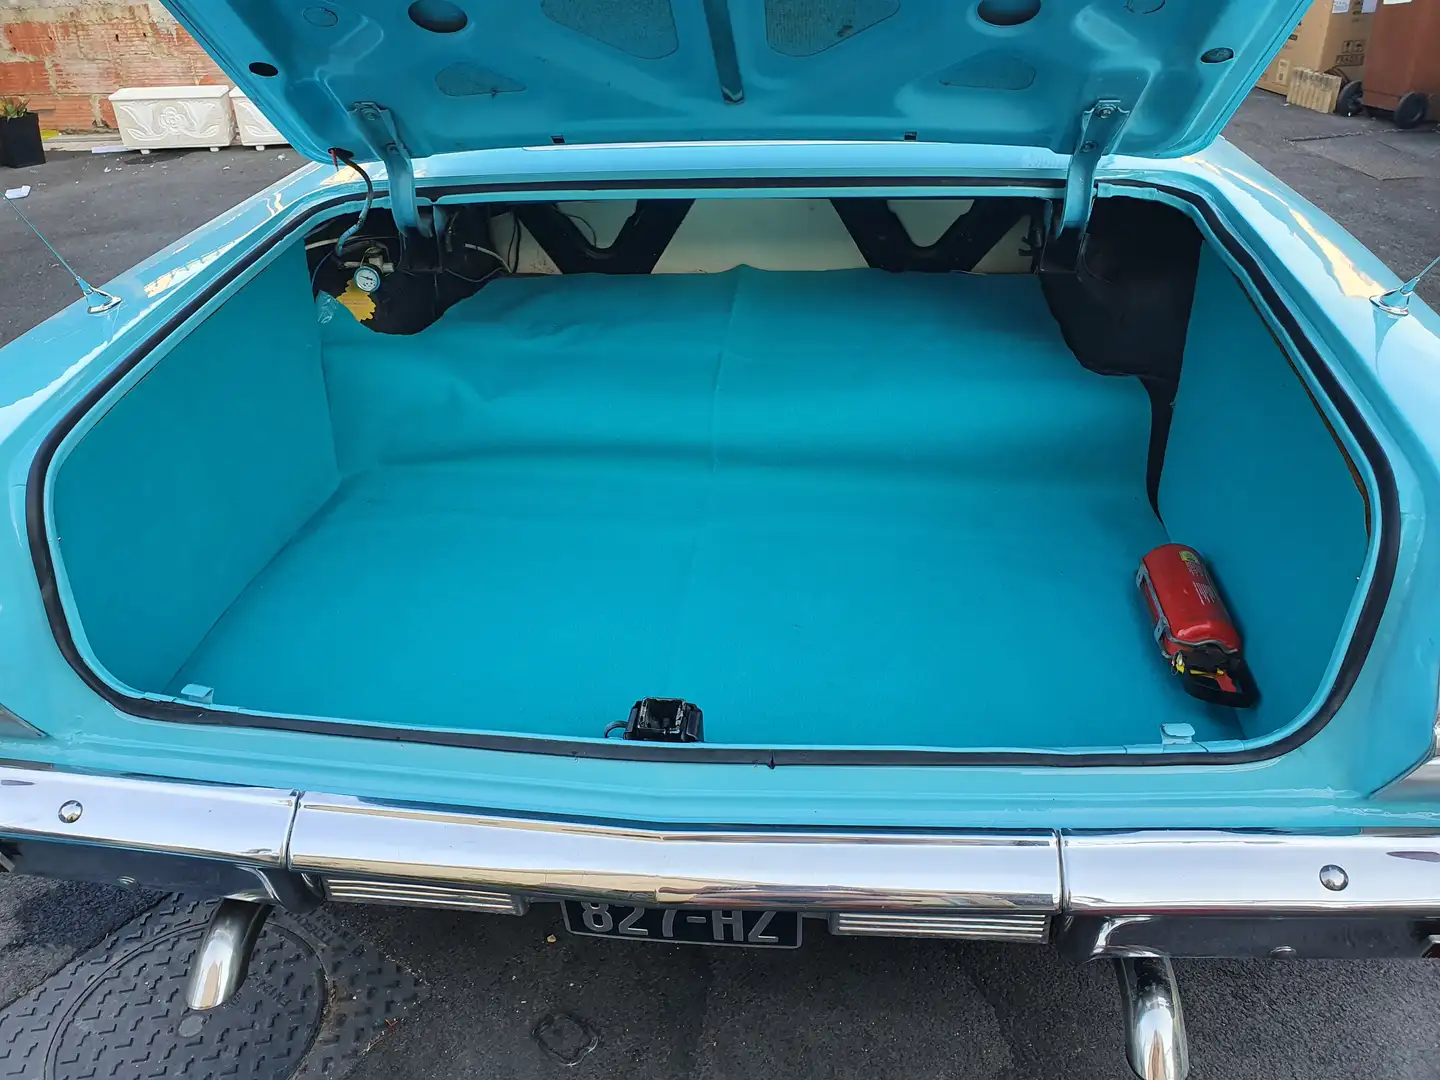 Chevrolet Impala Blue - 2